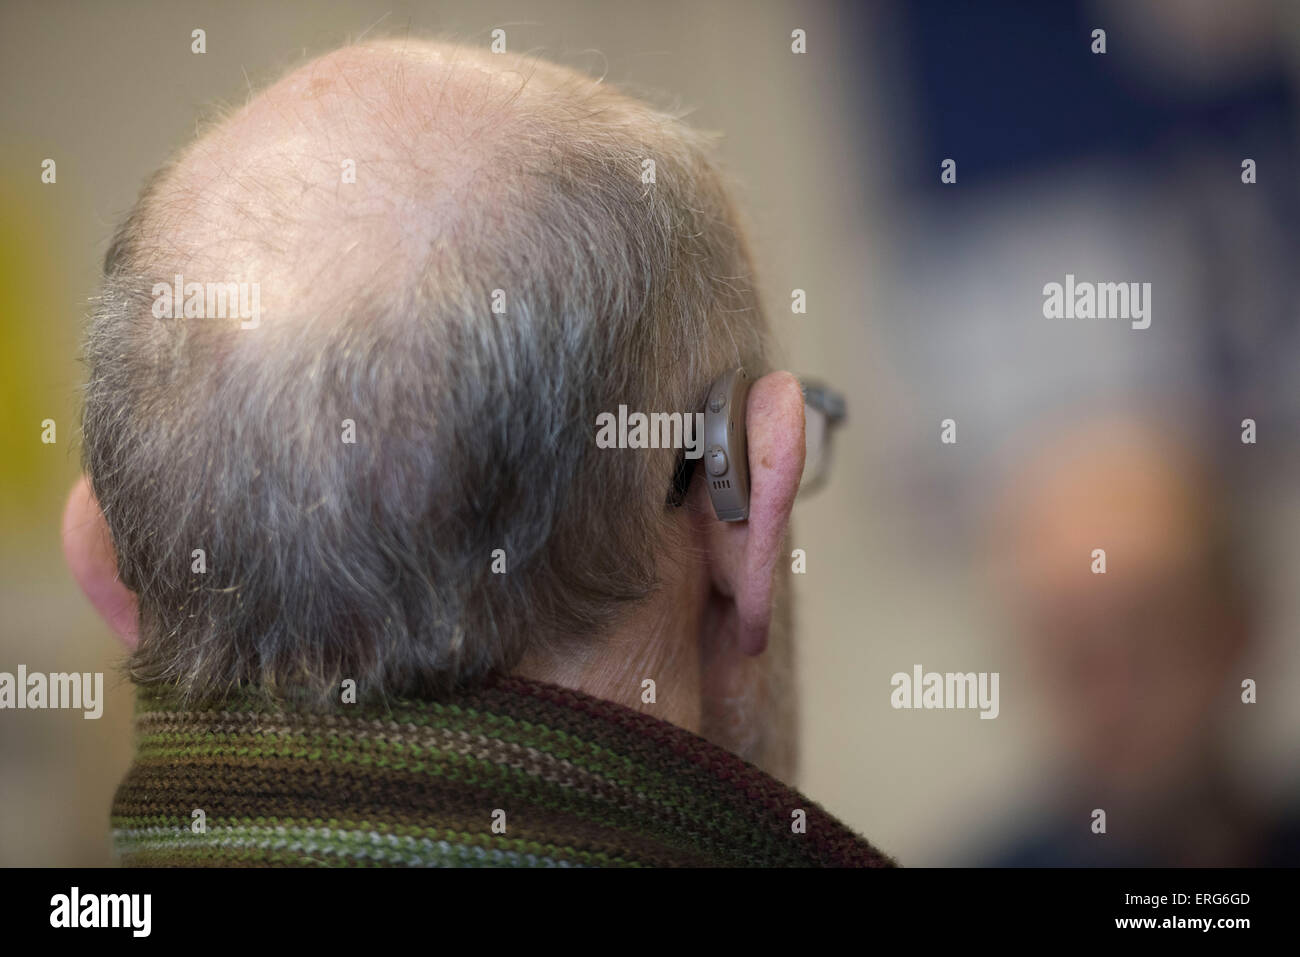 Un jubilado con problemas de audición que usa un audífono. Foto de stock